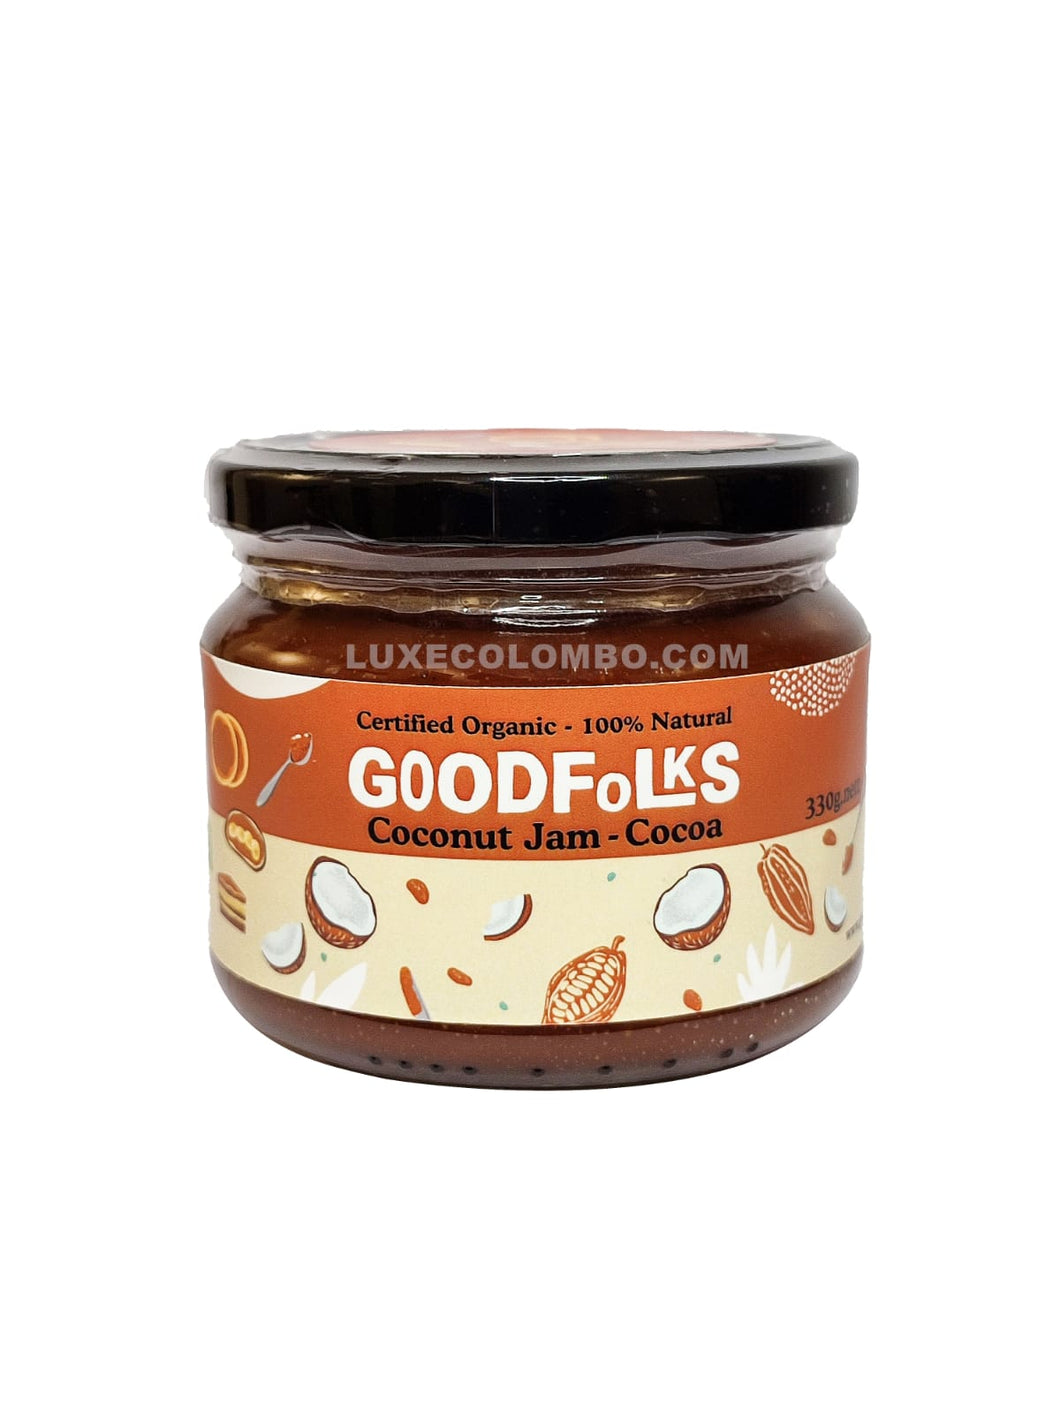 Cocoa Coconut Jam 330g - GoodFolks